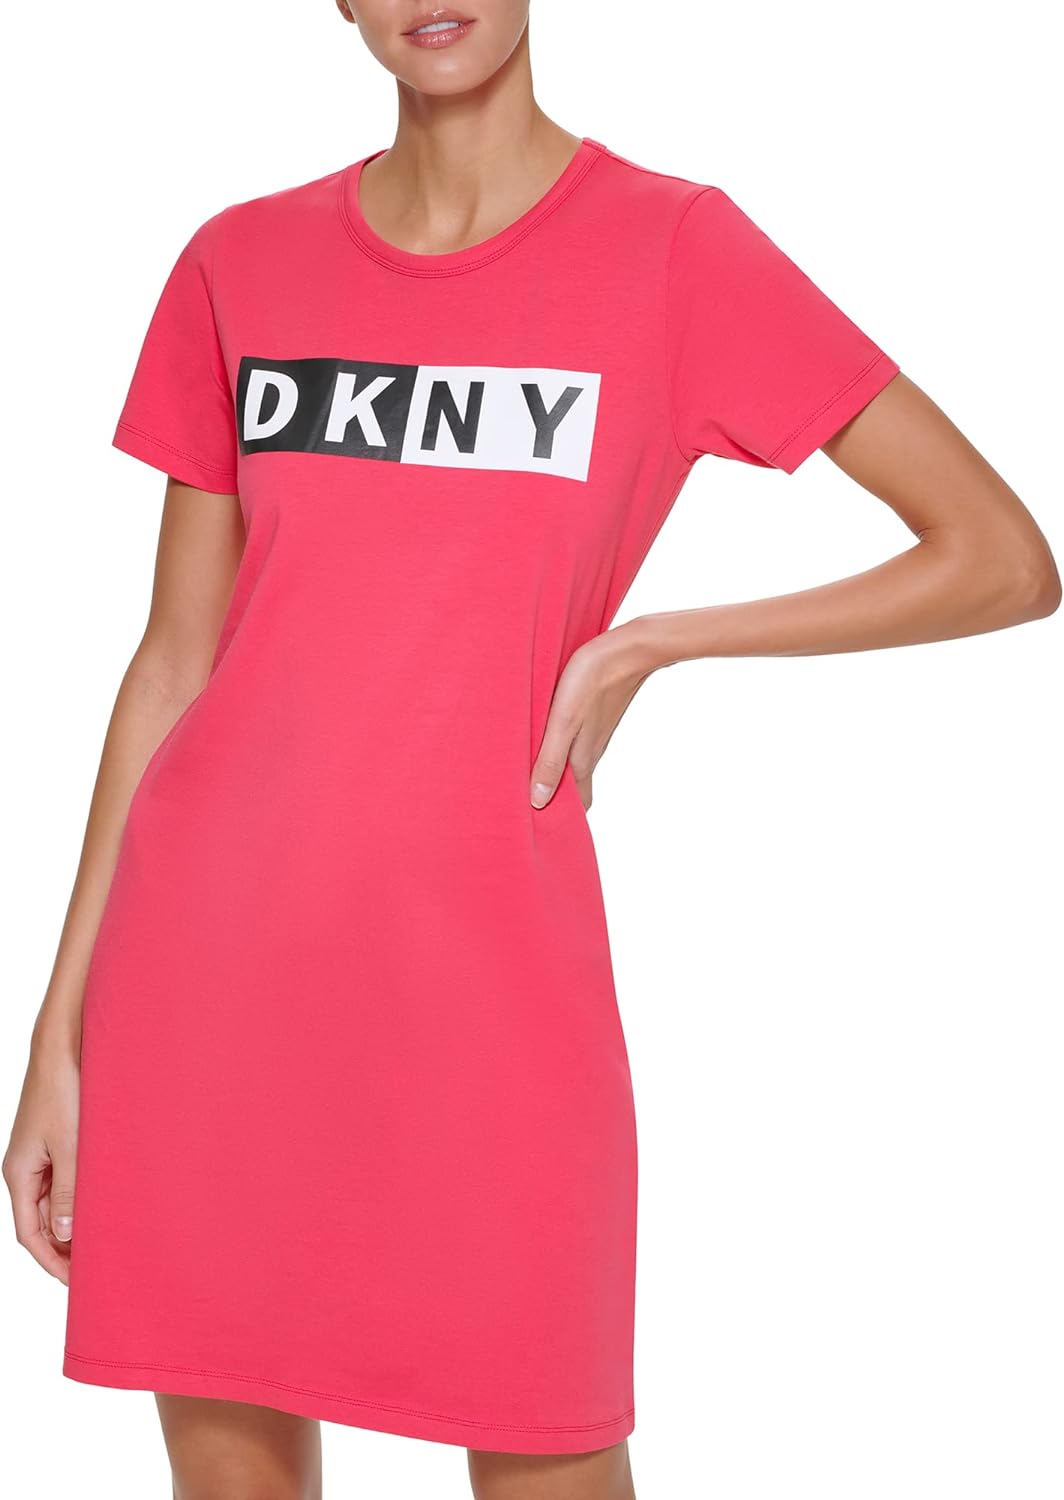 Dkny Women's Pink Dress ABF2435(me2)